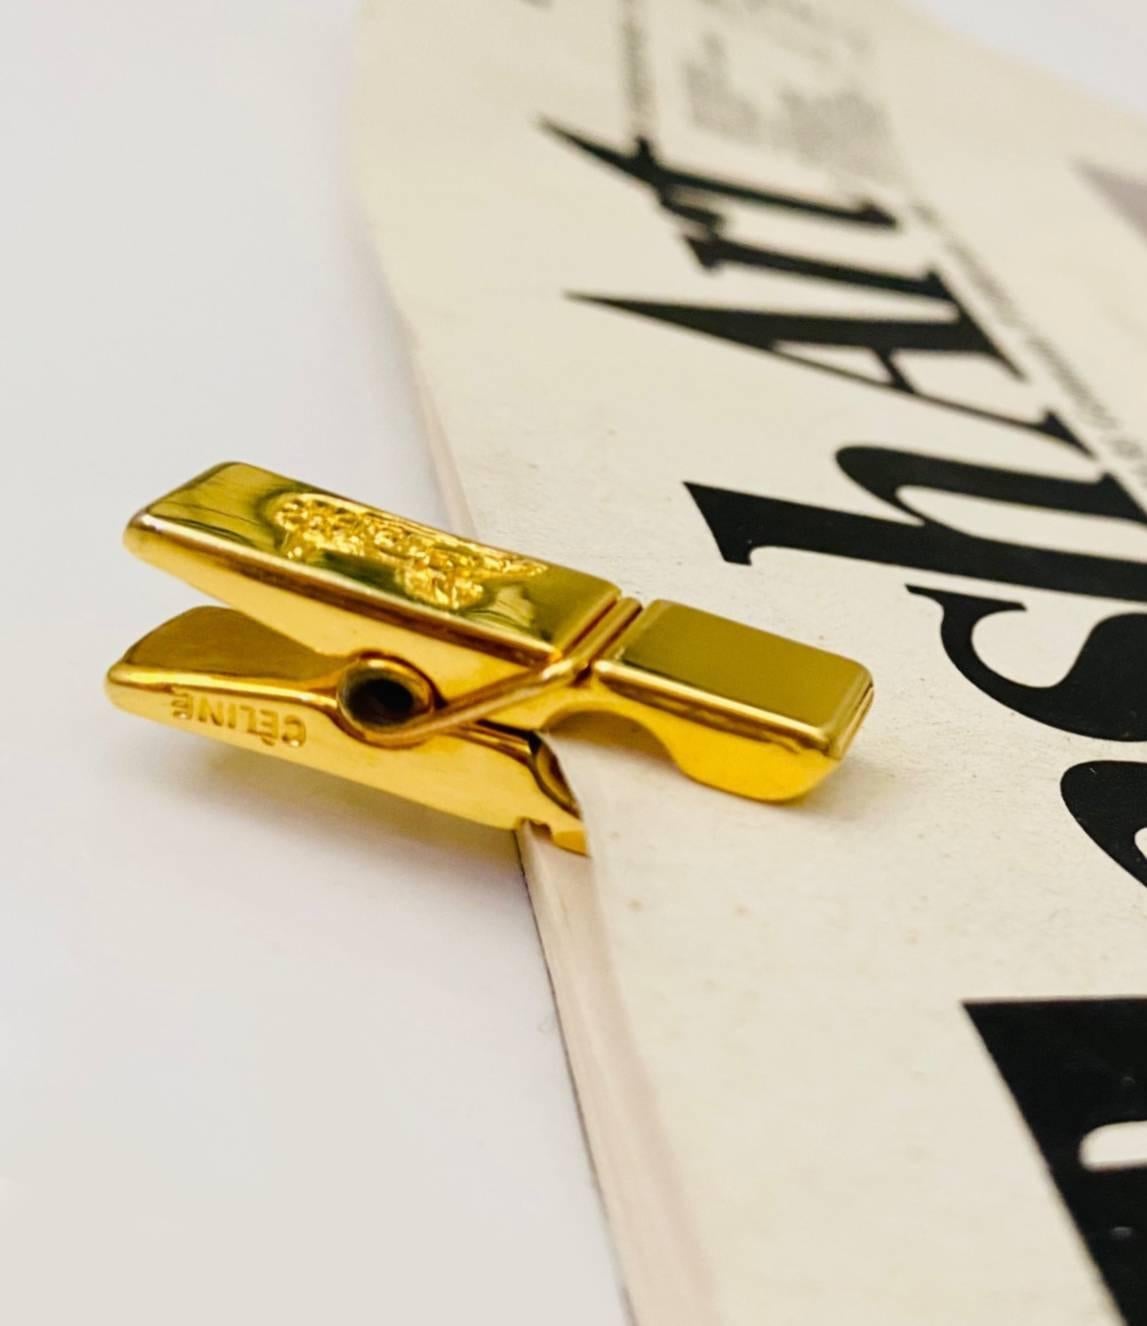 CELINE peg tie paper clip/ bookmarker in gold tone metal. featuring makers carriage CELINE on both sides of peg 

Condition: vintage, 1990s, excellent 

Dimensions: 3 cm x 1 cm